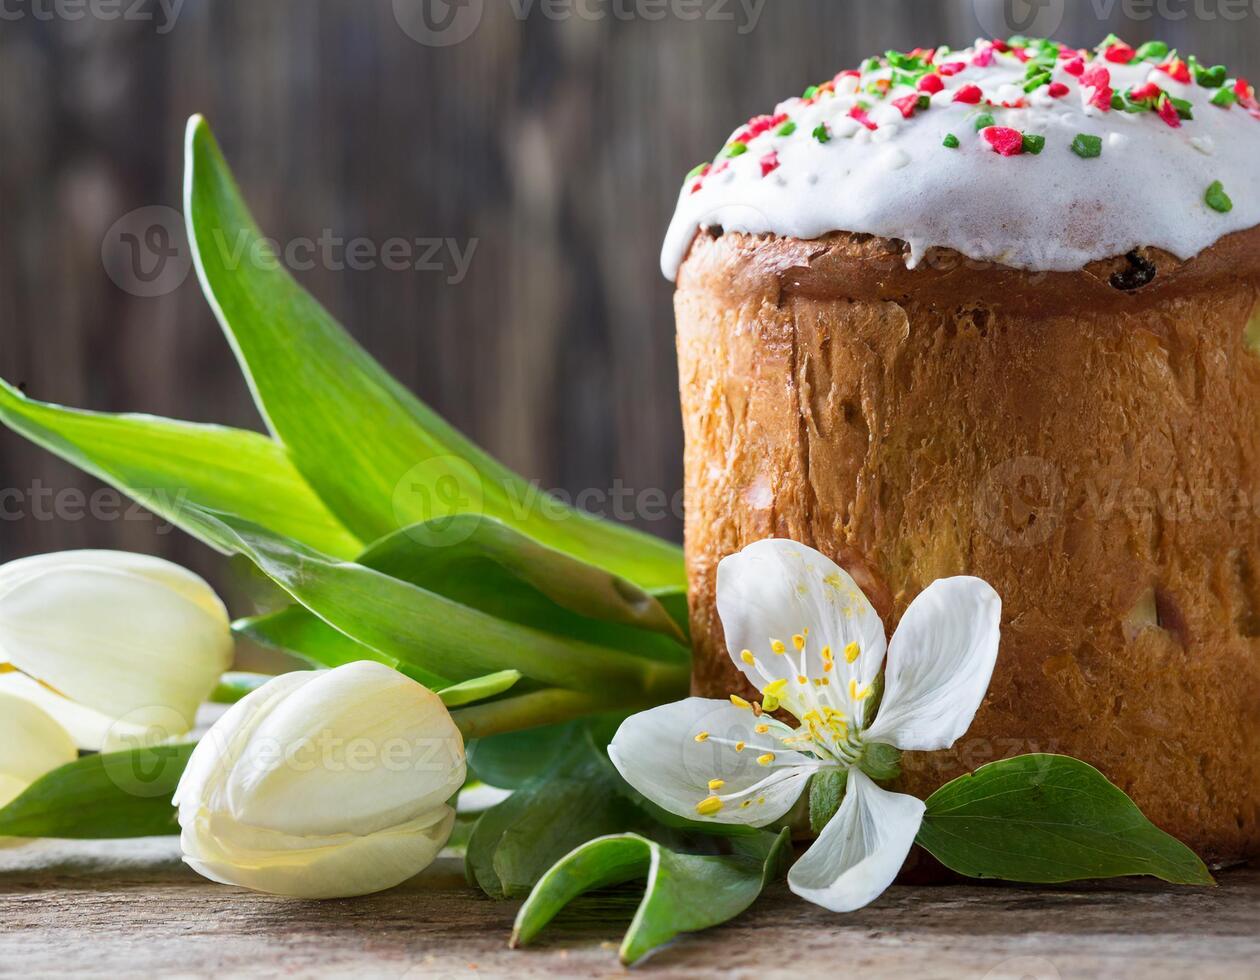 Pasen ei panettone brood taart achtergrond gelukkig Pasen voorjaar vakantie tulp foto